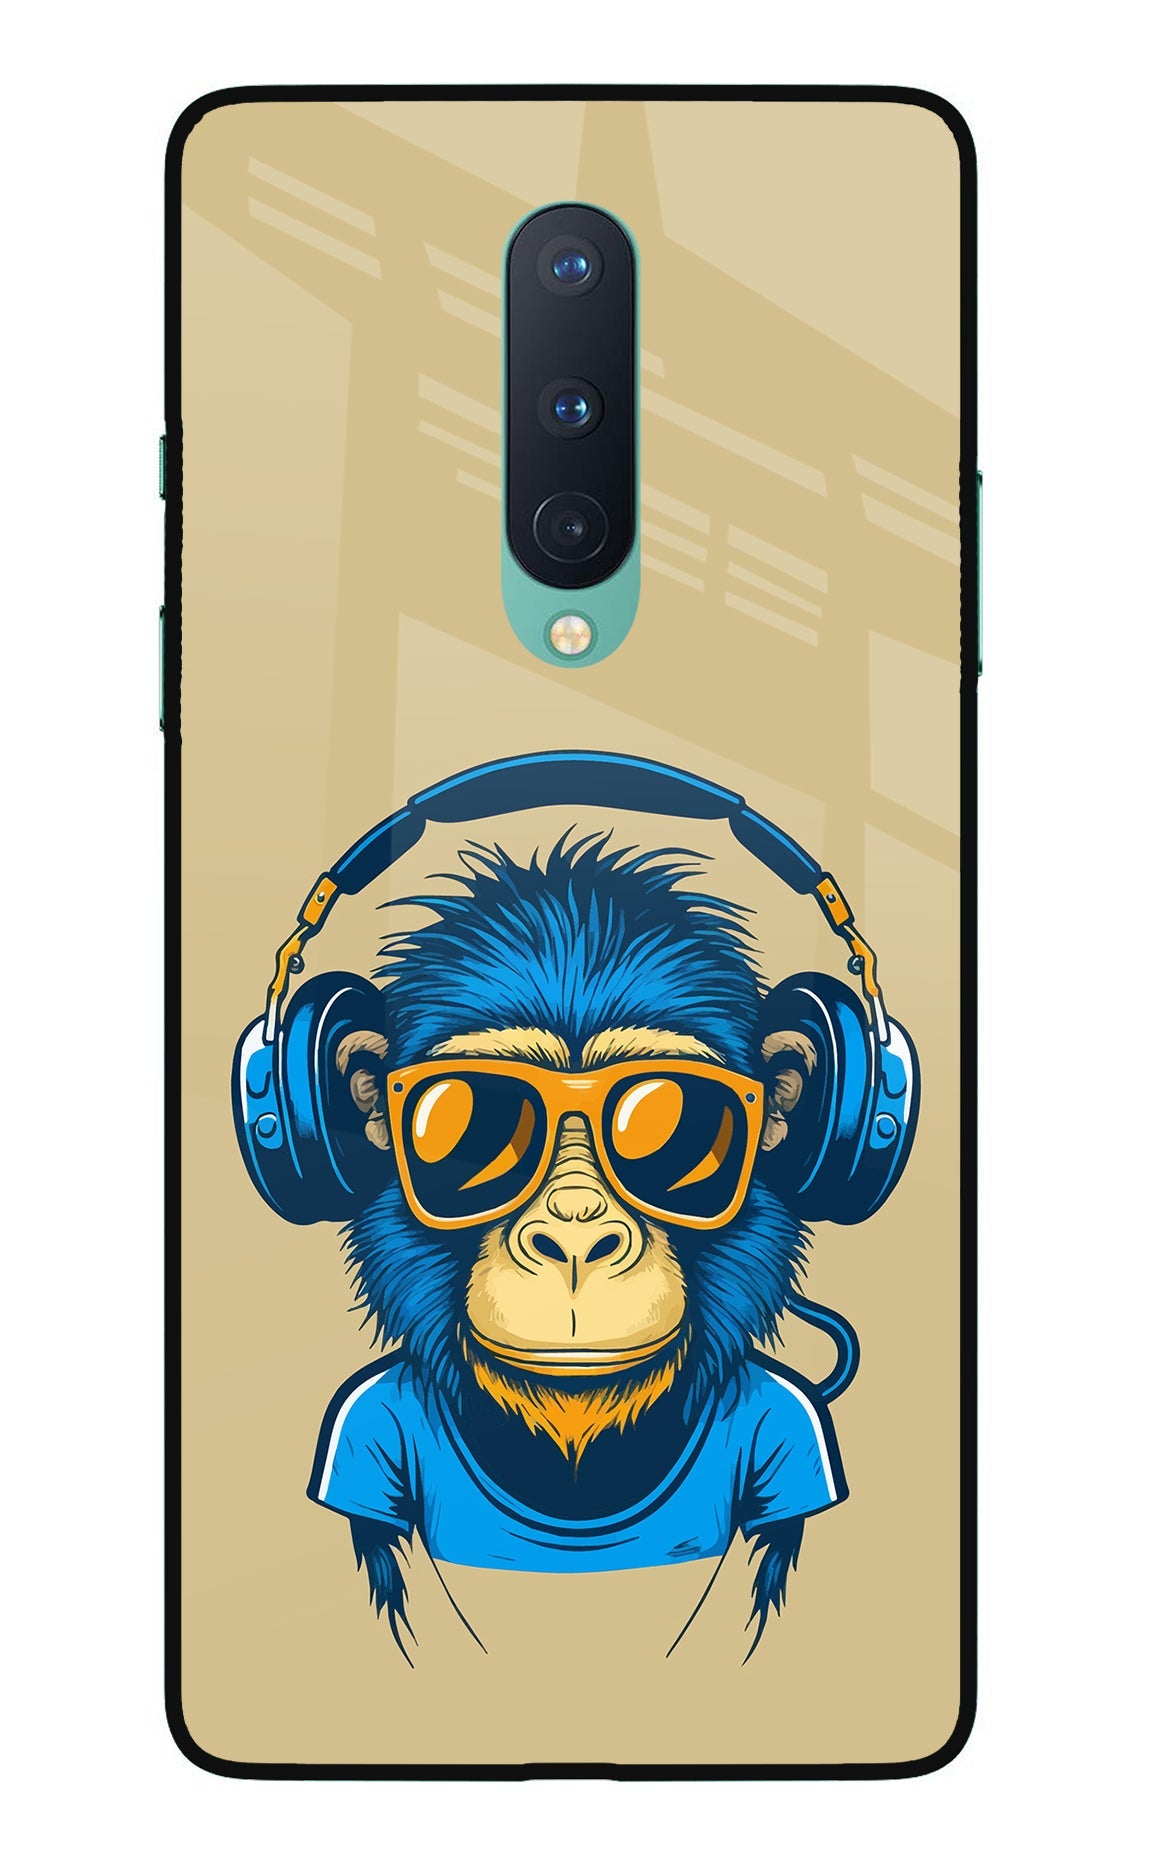 Monkey Headphone Oneplus 8 Glass Case